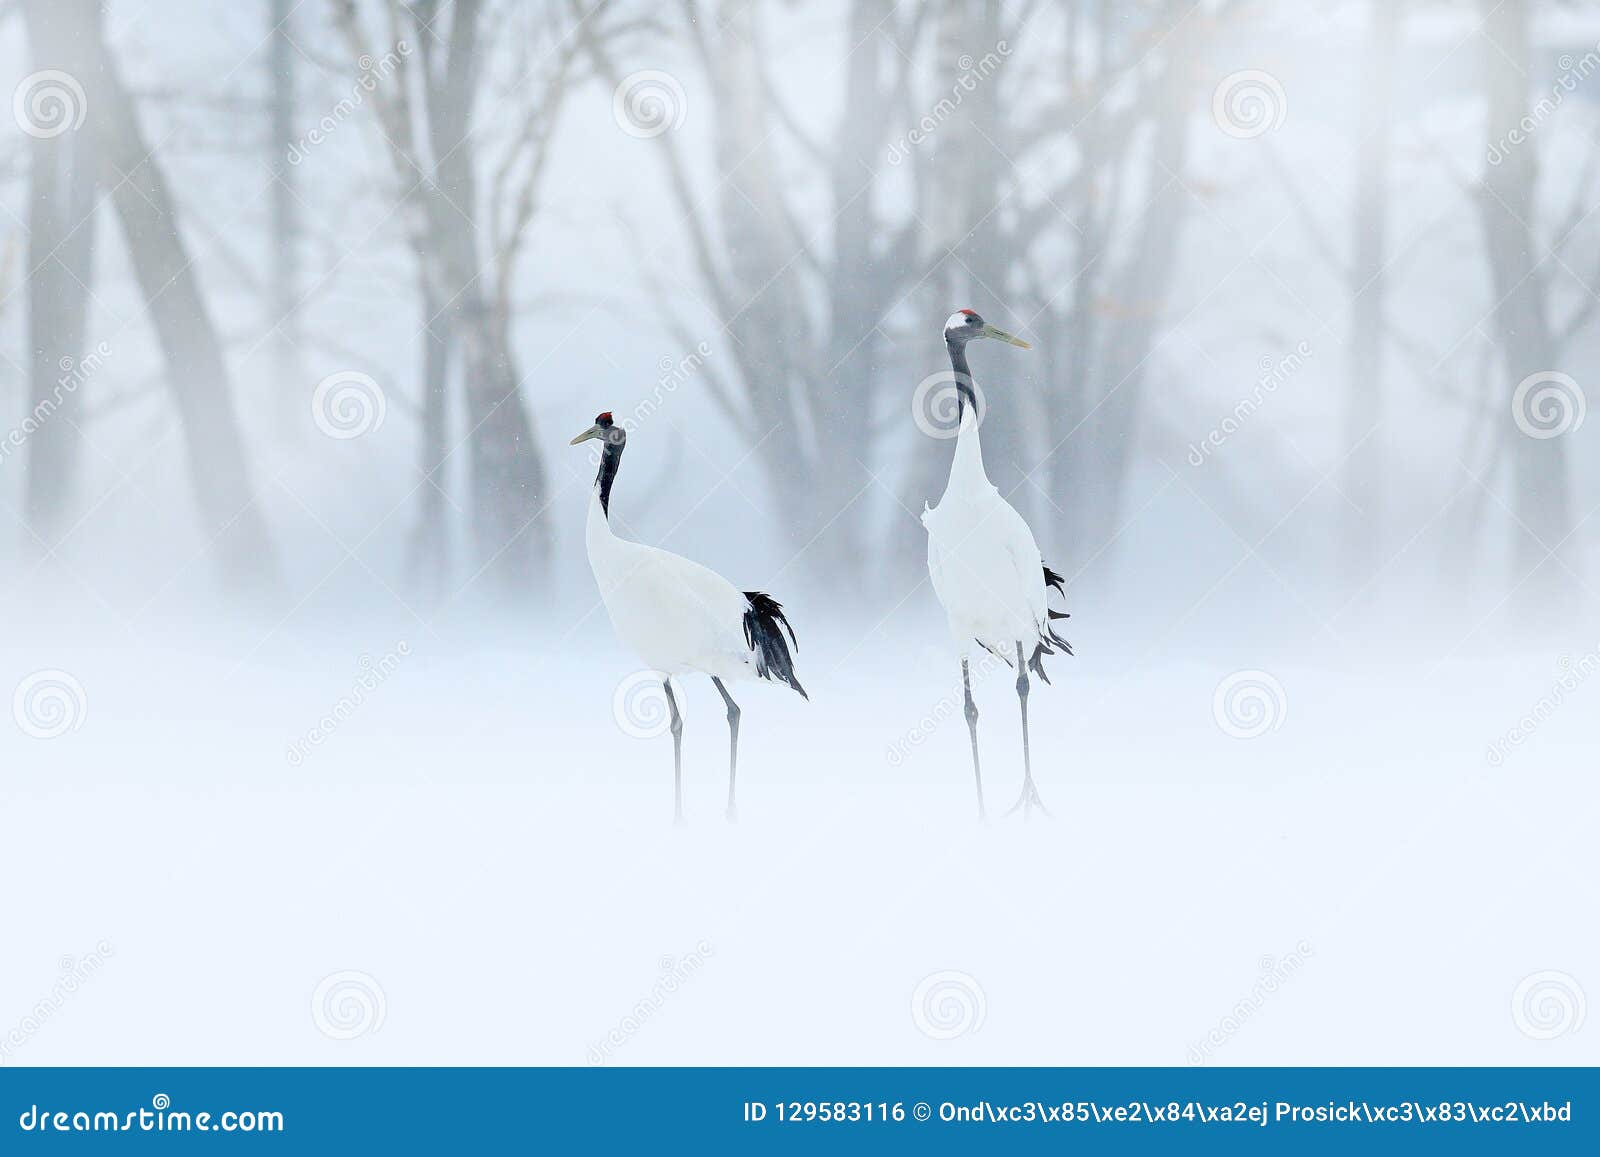 red-crowned crane, grus japonensis, walking in the snow, hokkaido, japan. beautiful bird in the nature habitat. wildlife scene fro